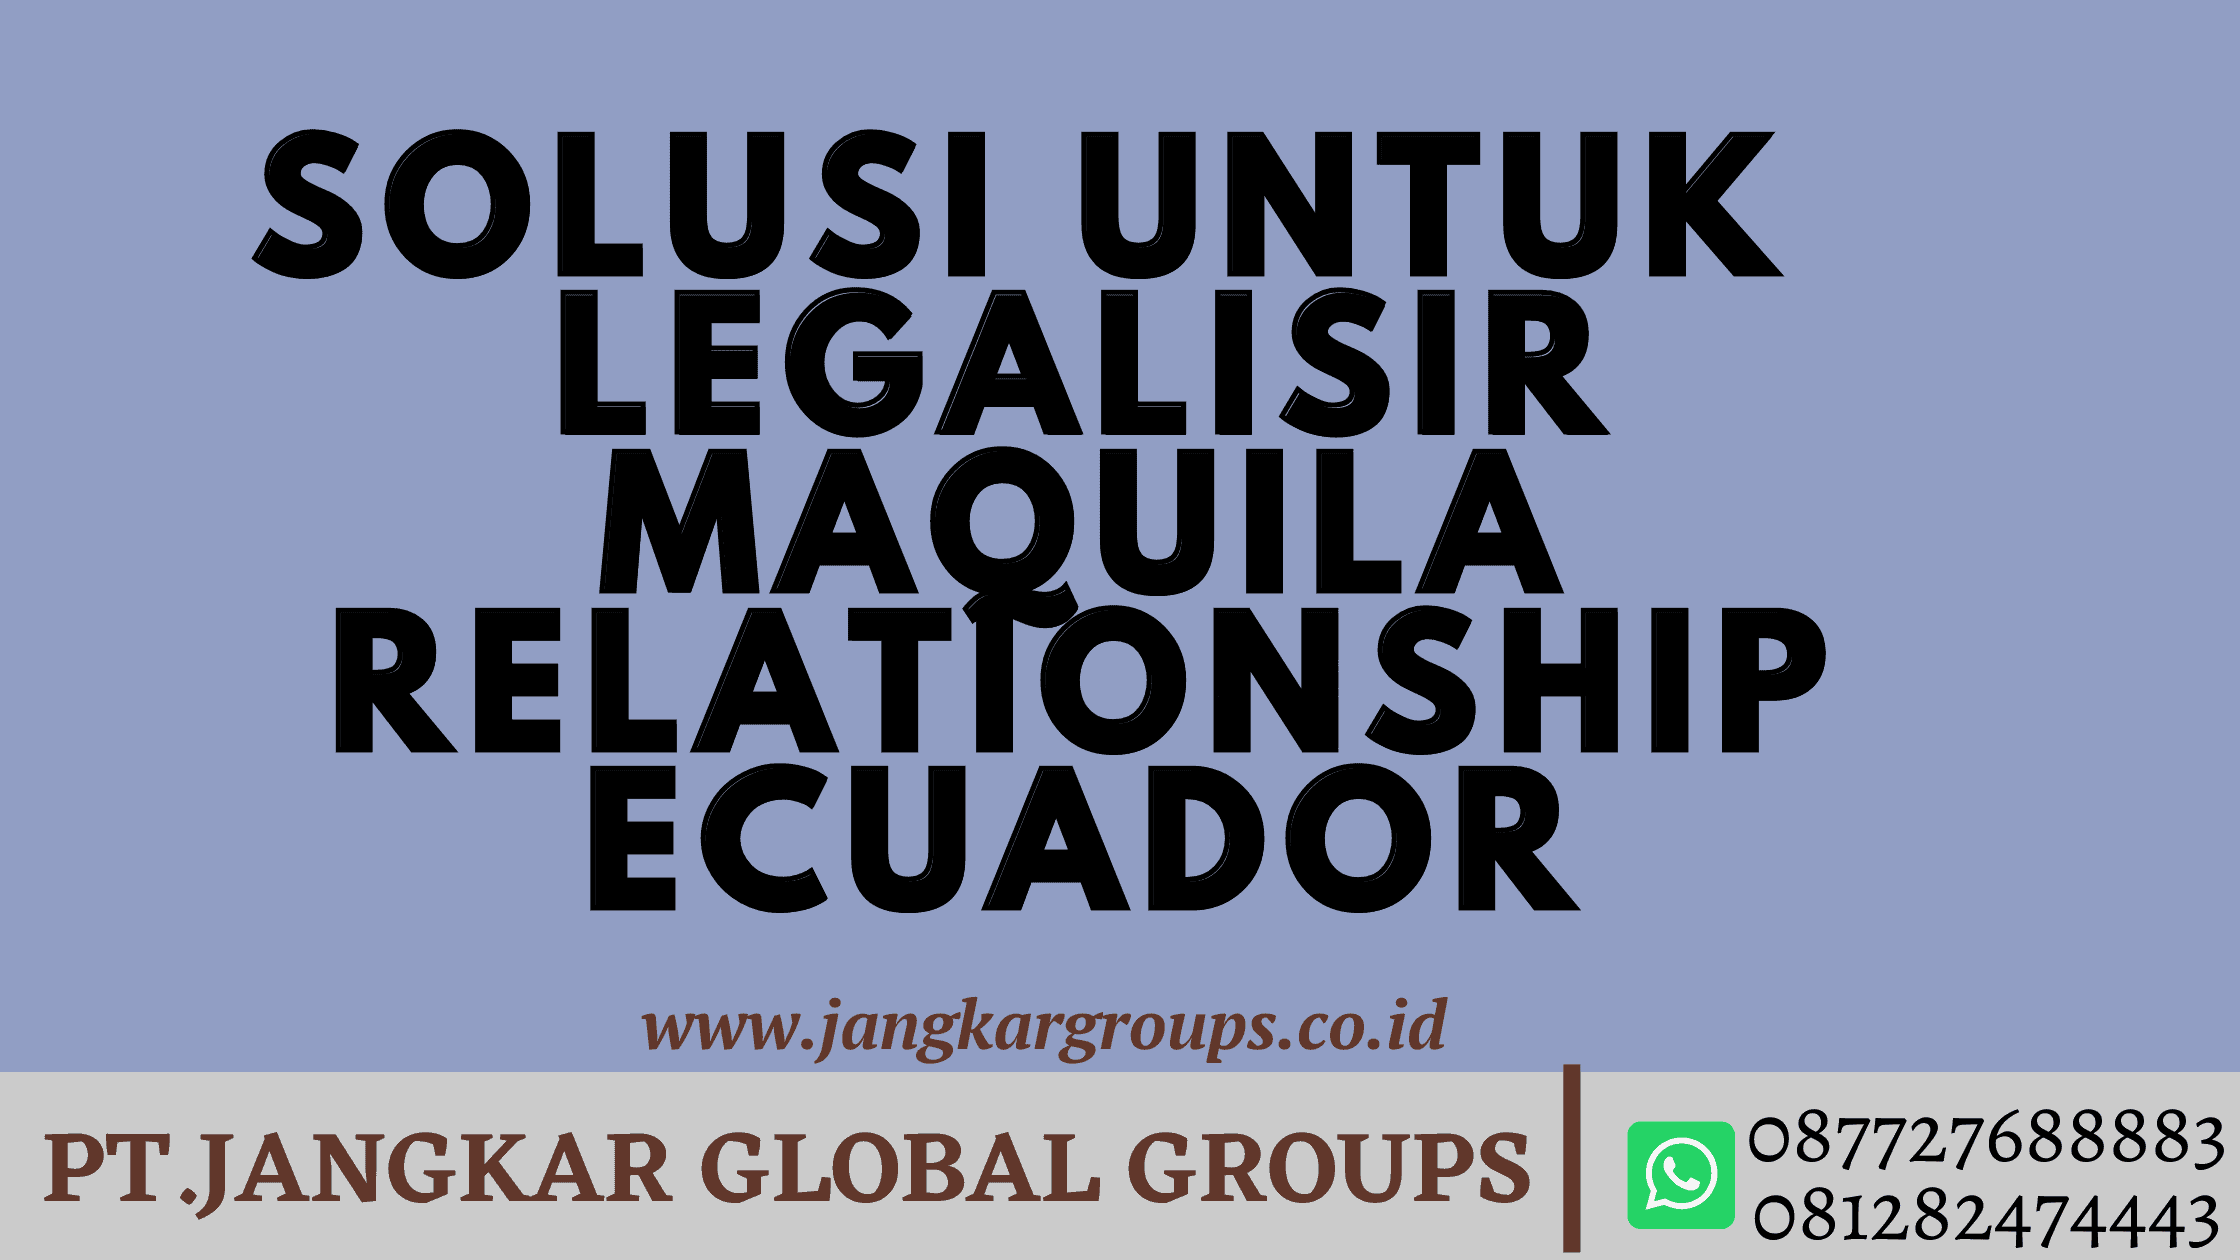 solusi untuk Jasa Legalisir Maquila Relationship Ecuador